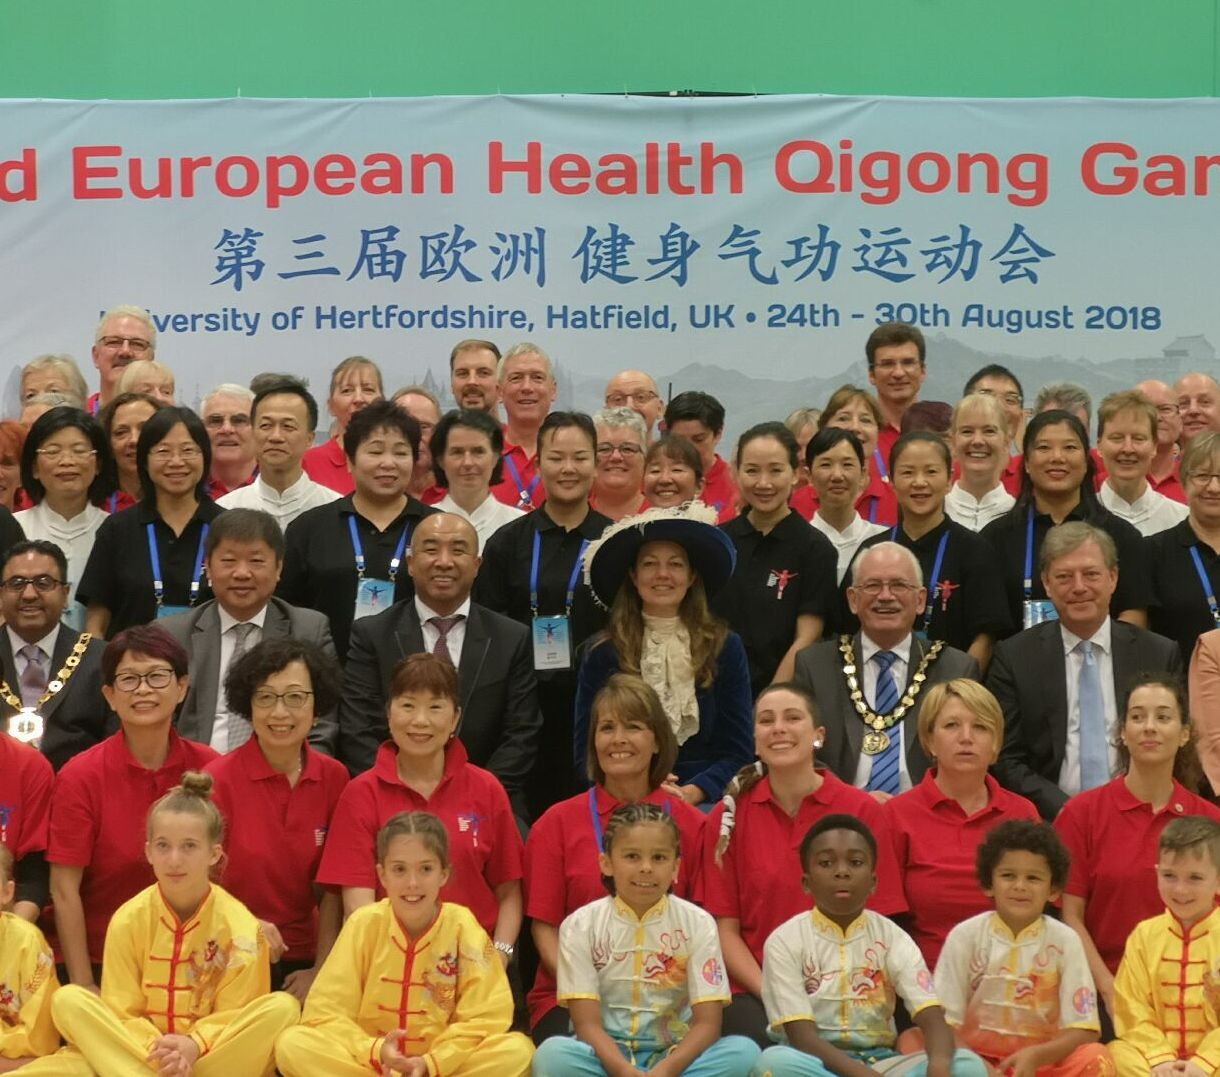 3rd European Health Qigong Games Successfully Held